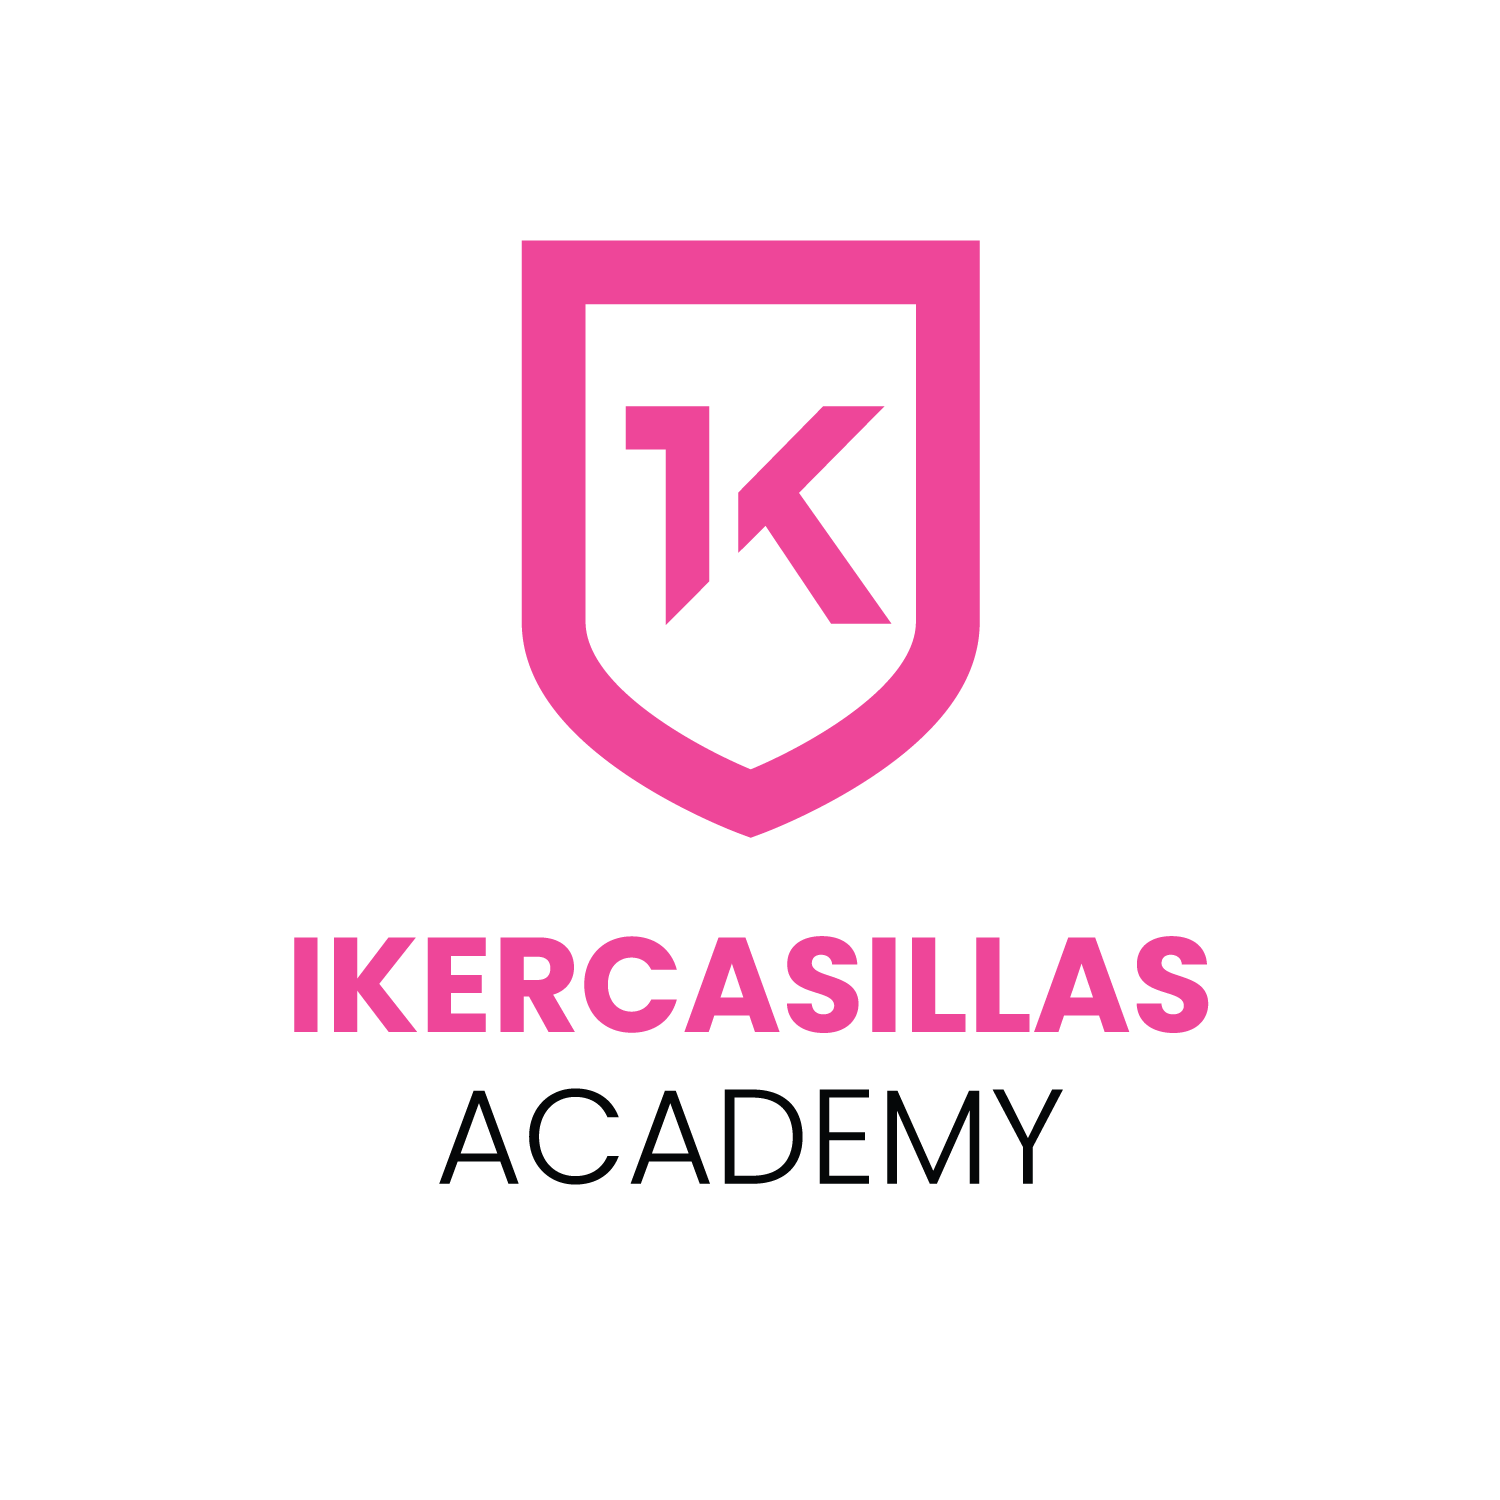 1K Academy